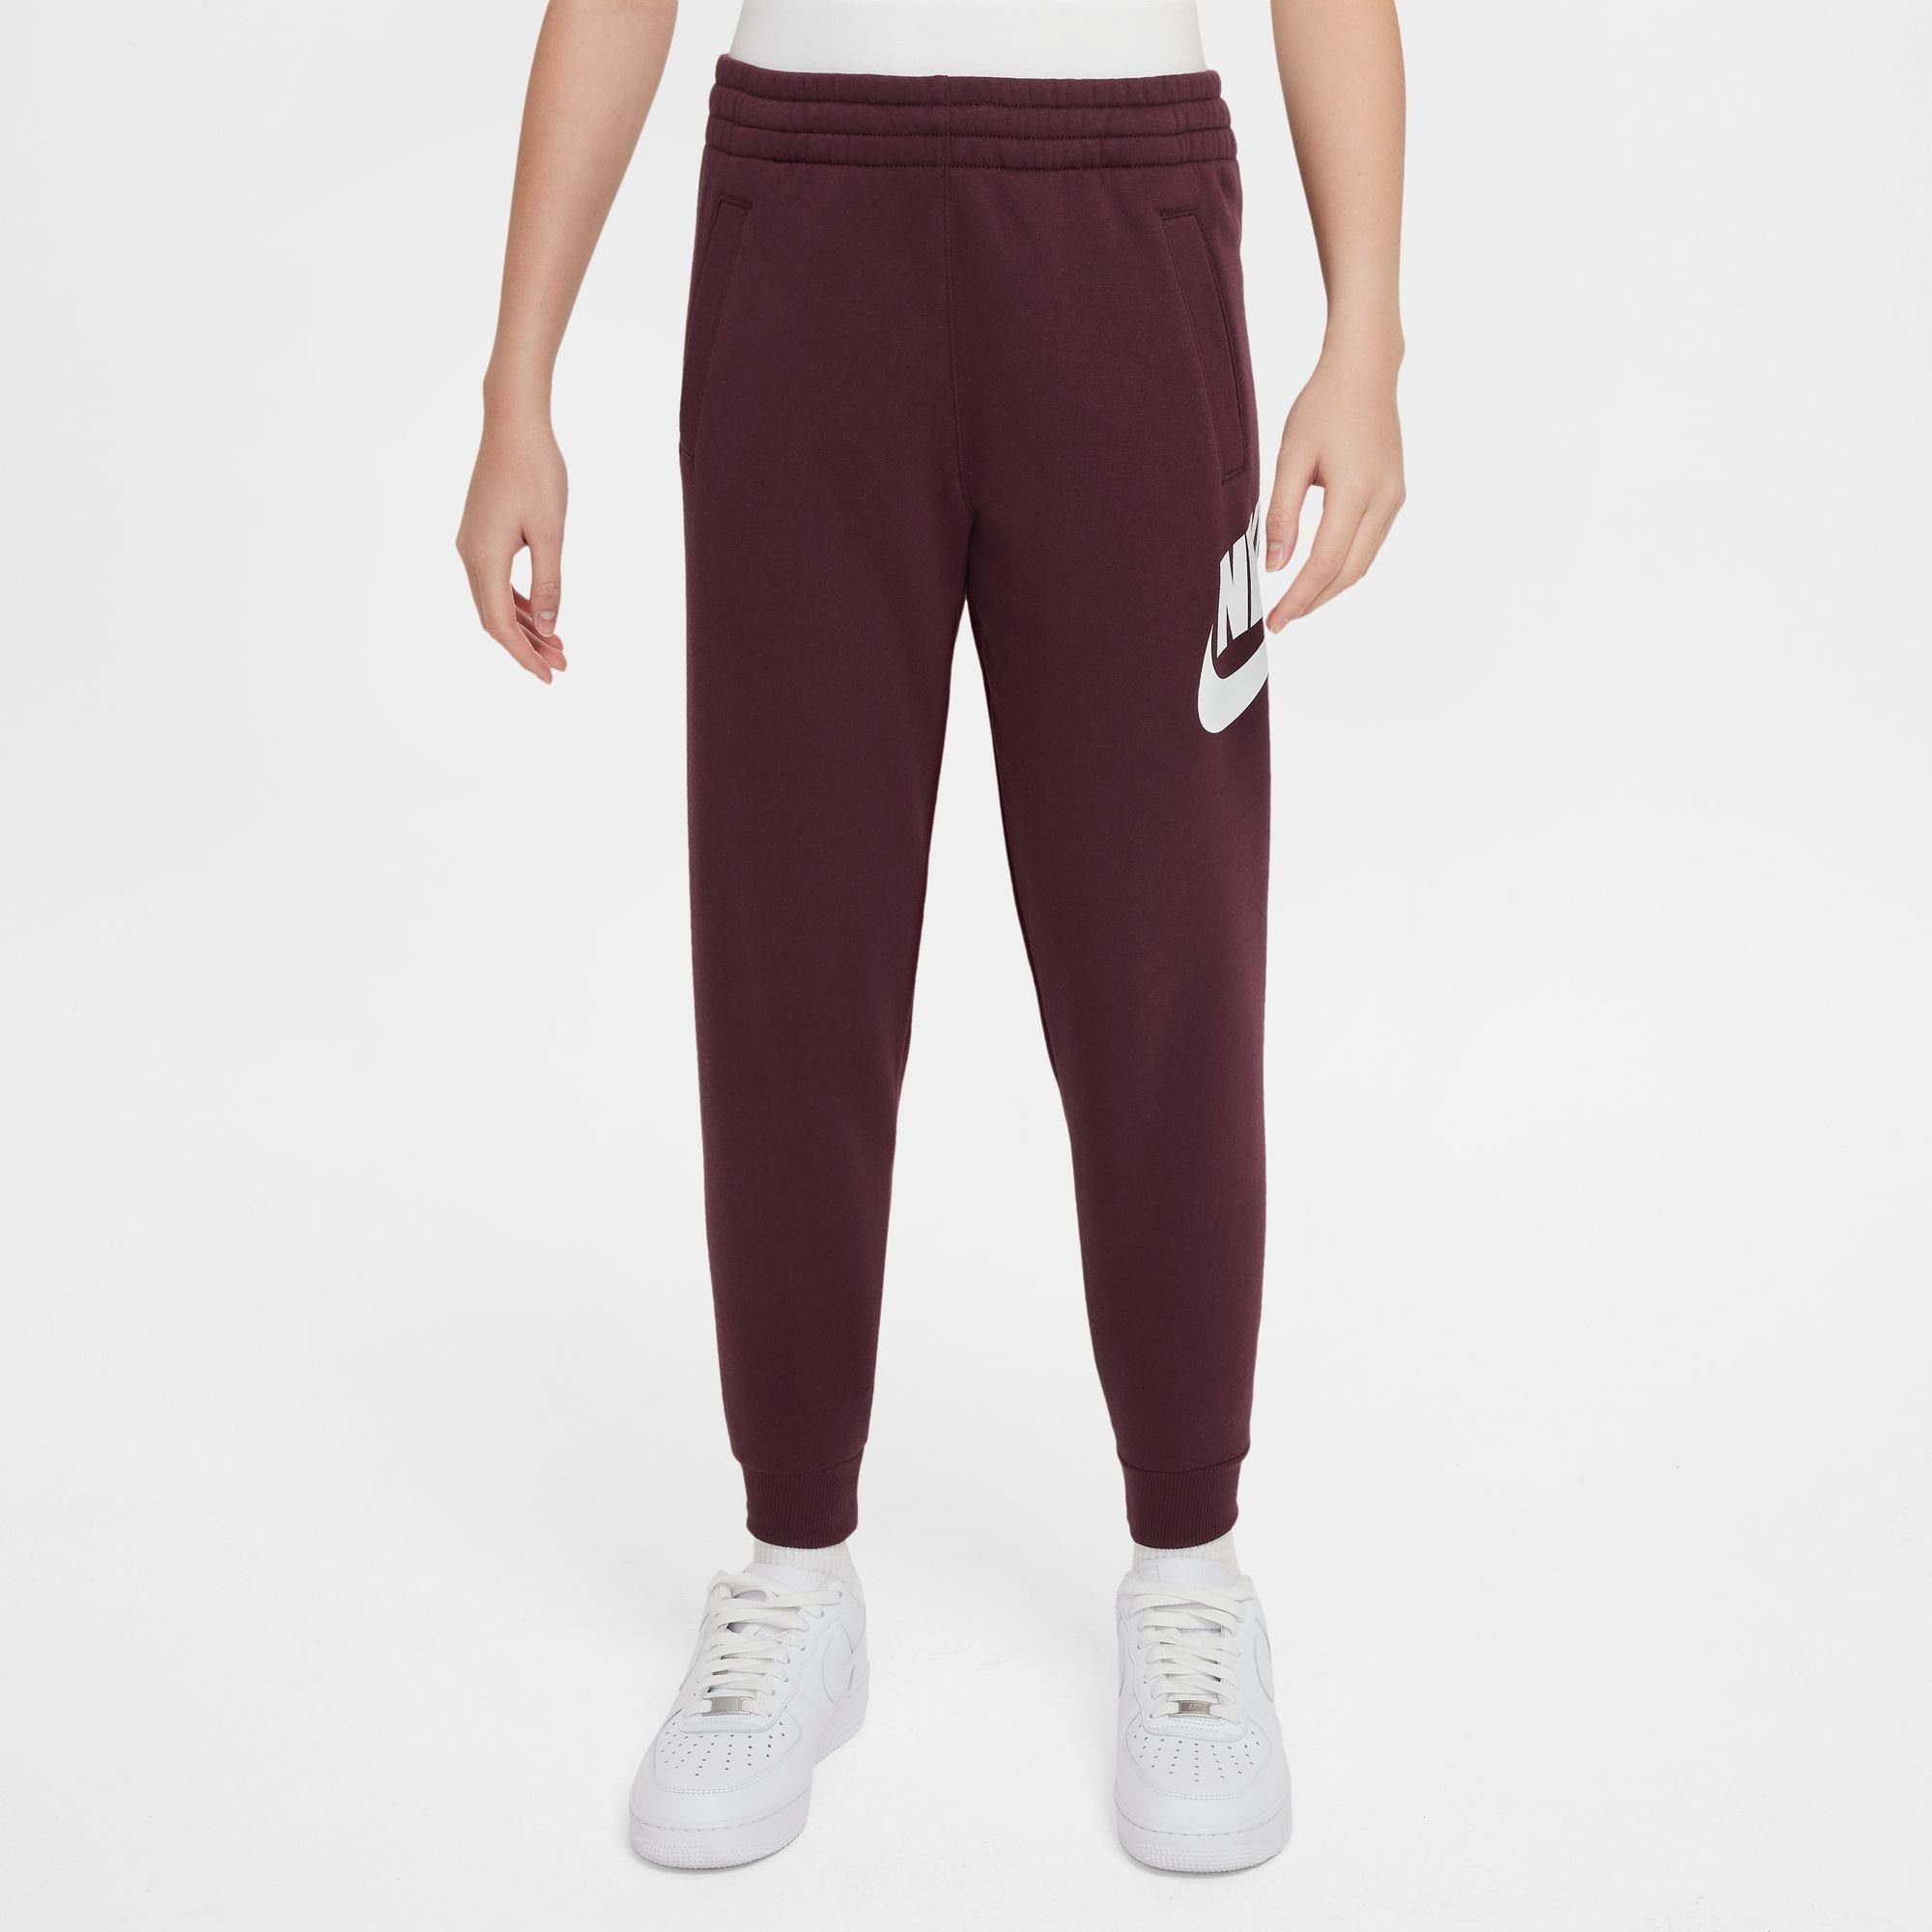 PANTS JOGGER KIDS' BIG FLEECE MAROON/WHITE Jogginghose CLUB NIGHT Nike Sportswear